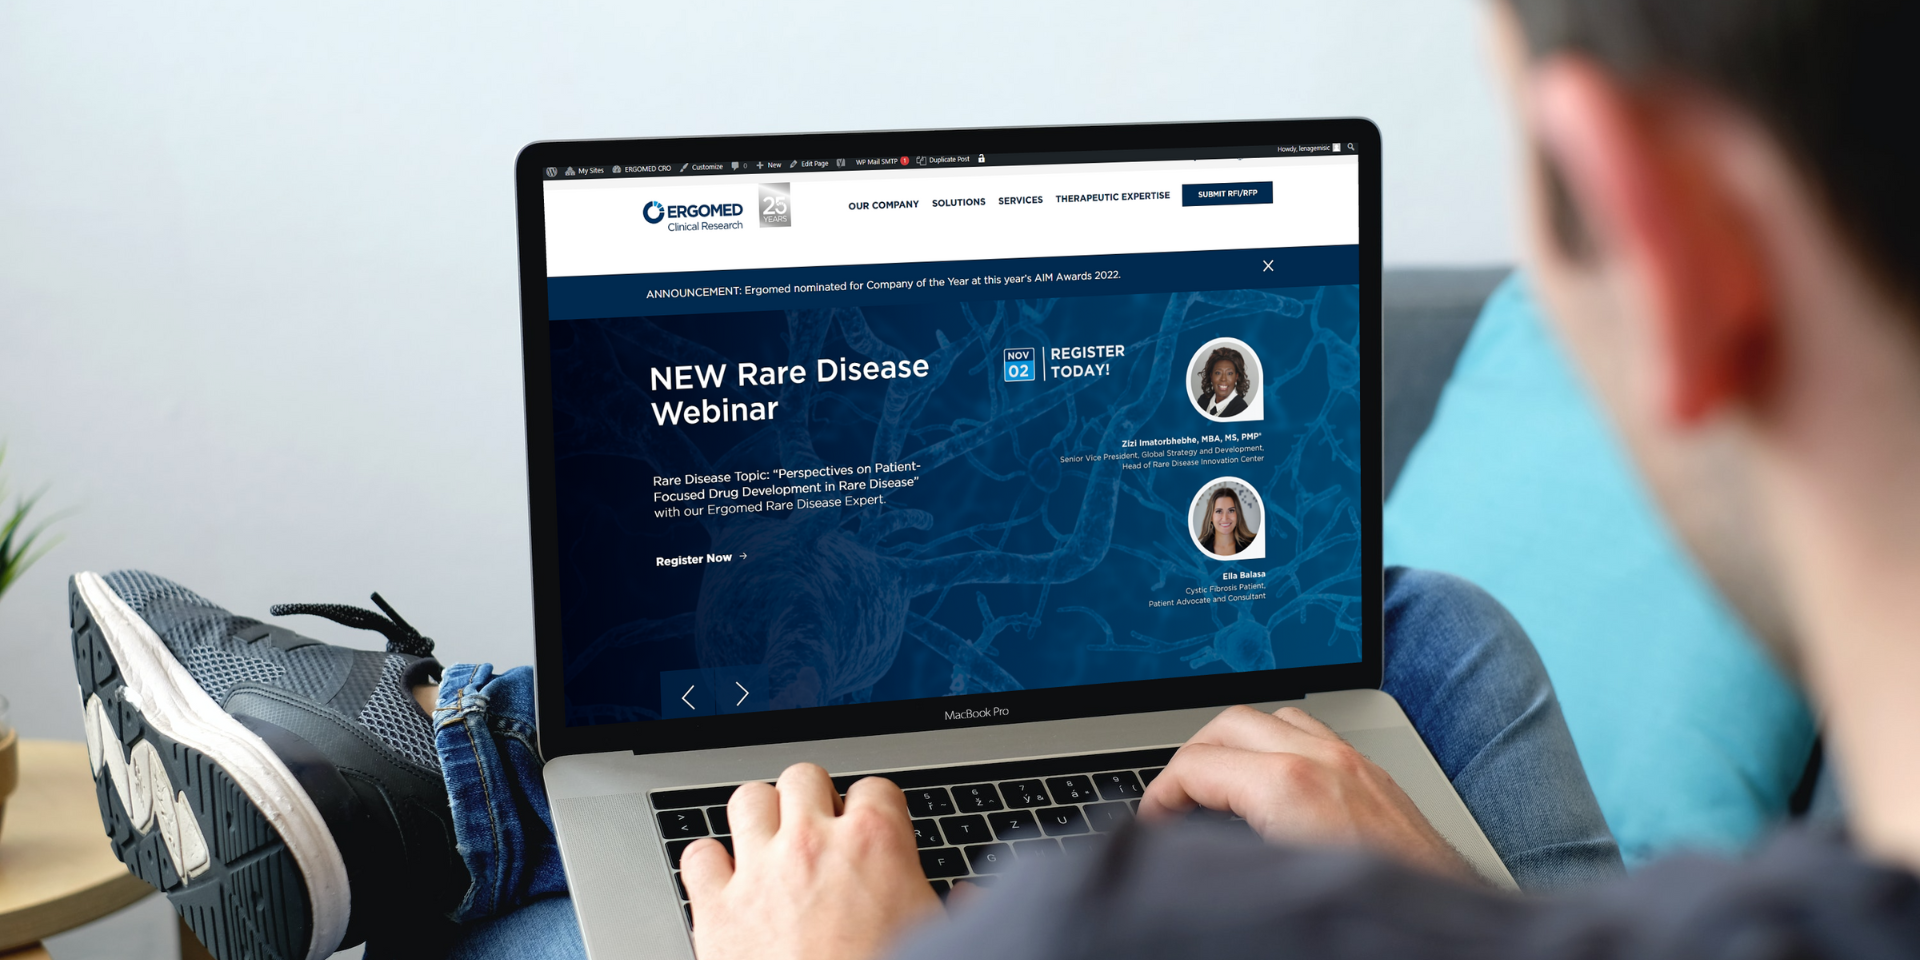 NEW Rare Disease Webinar